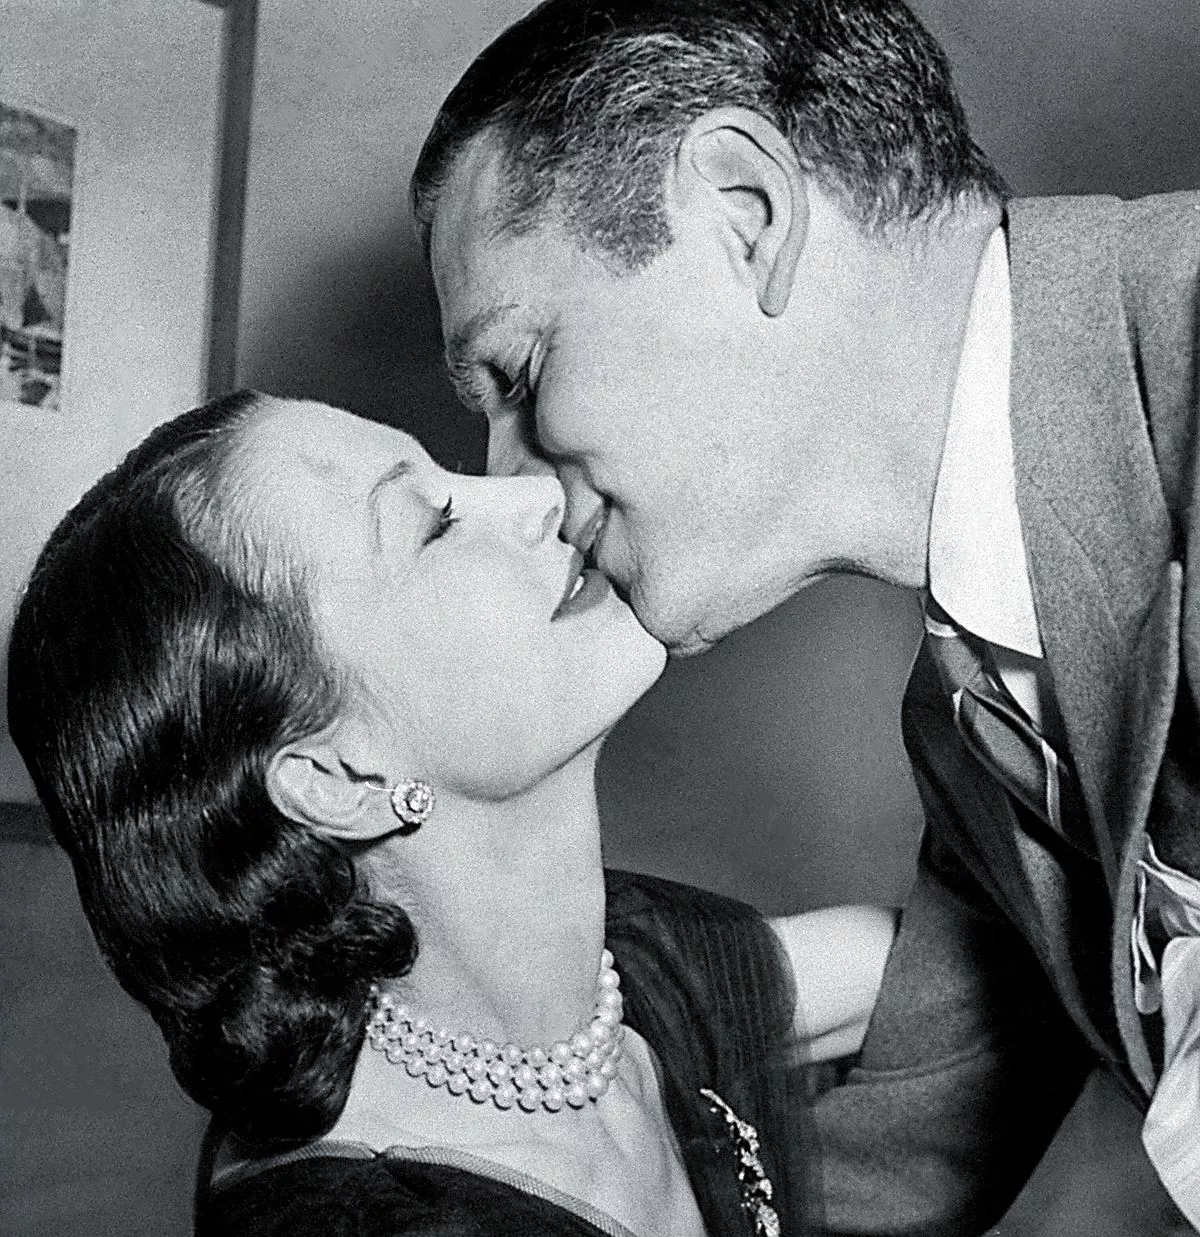 Сэр Лоуренс Оливье целует свою жену Вивьен Ли, 1951 г.